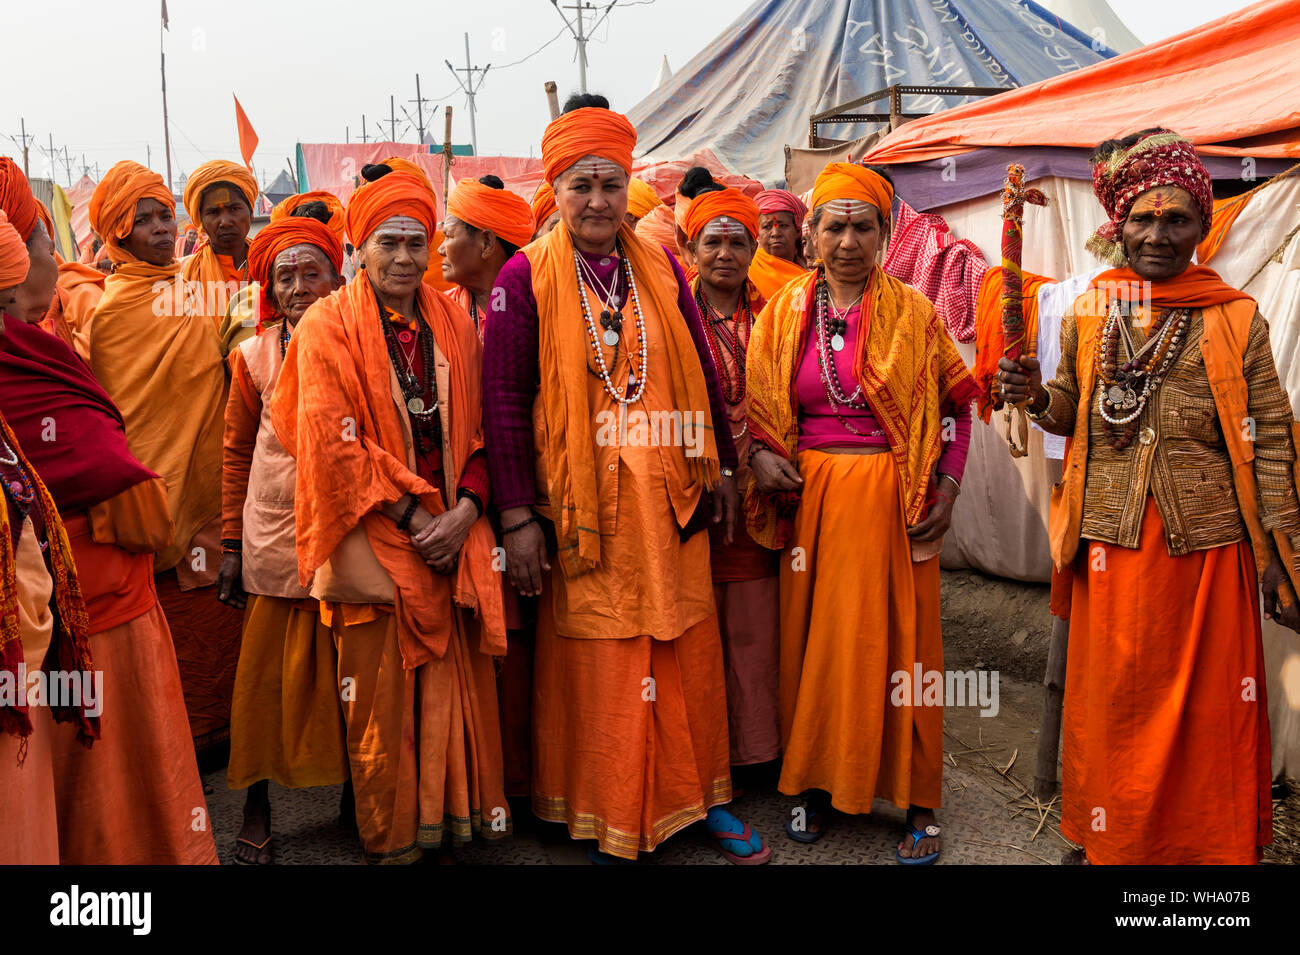 Sadhvi in orange red saree during Allahabad Kumbh Mela, World's largest religious gathering, Allahabad, Uttar Pradesh, India, Asia Stock Photo